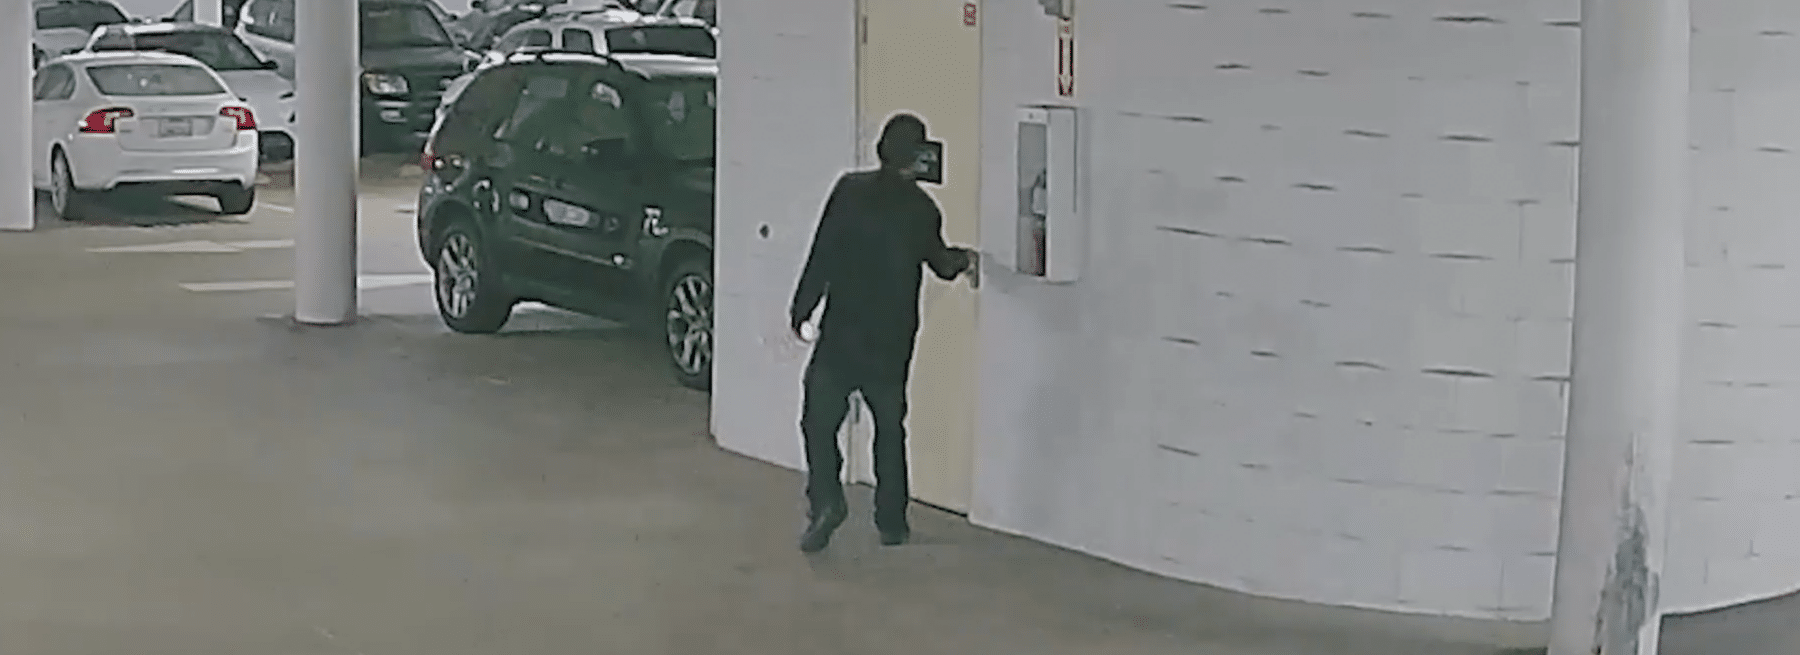 SoCal vehicle burglar caught